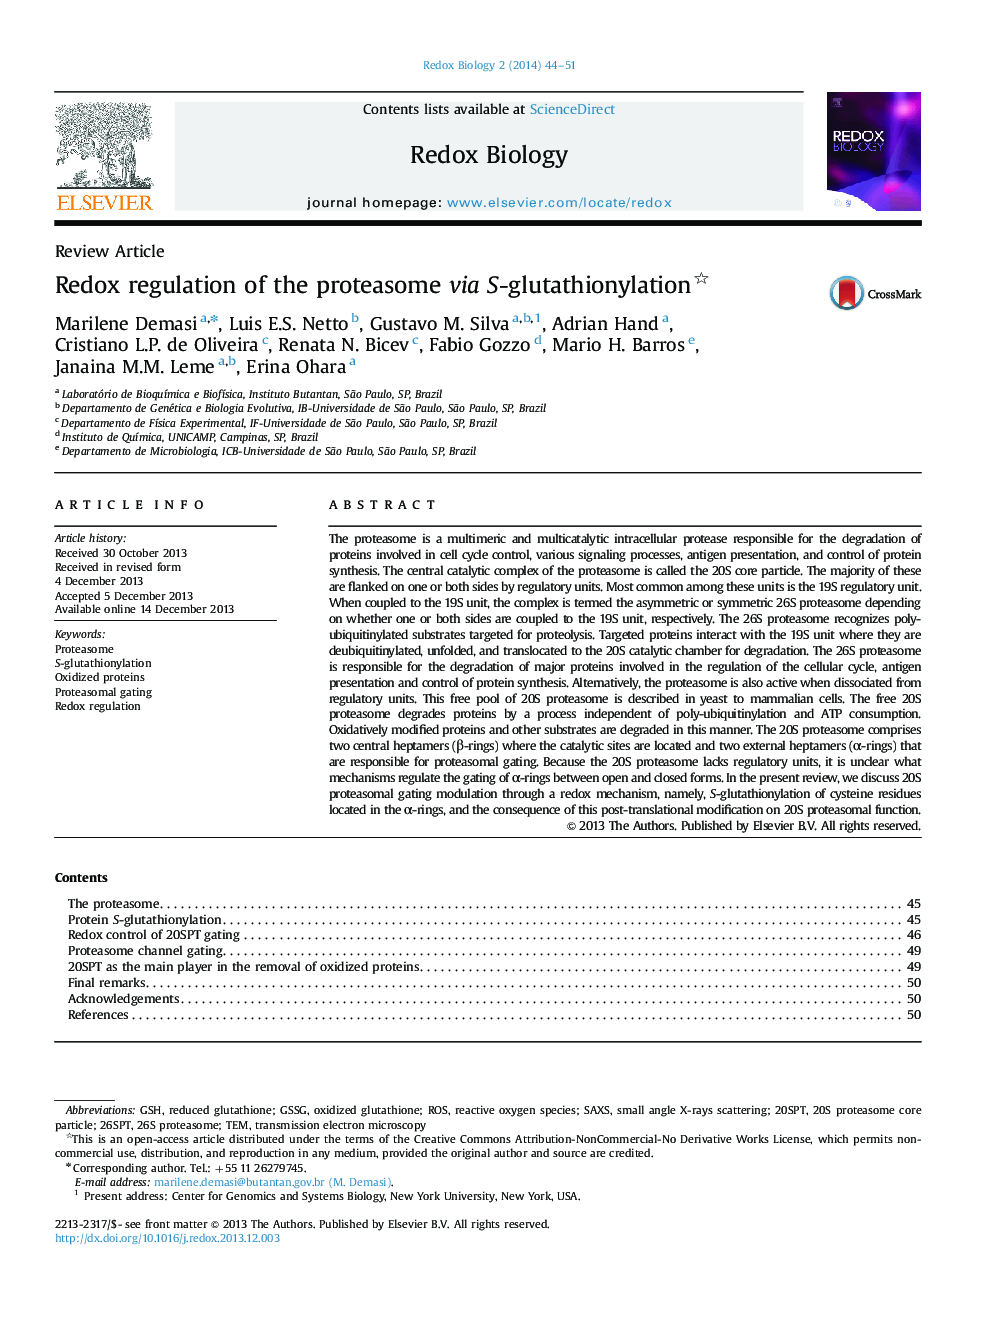 Redox regulation of the proteasome via S-glutathionylation